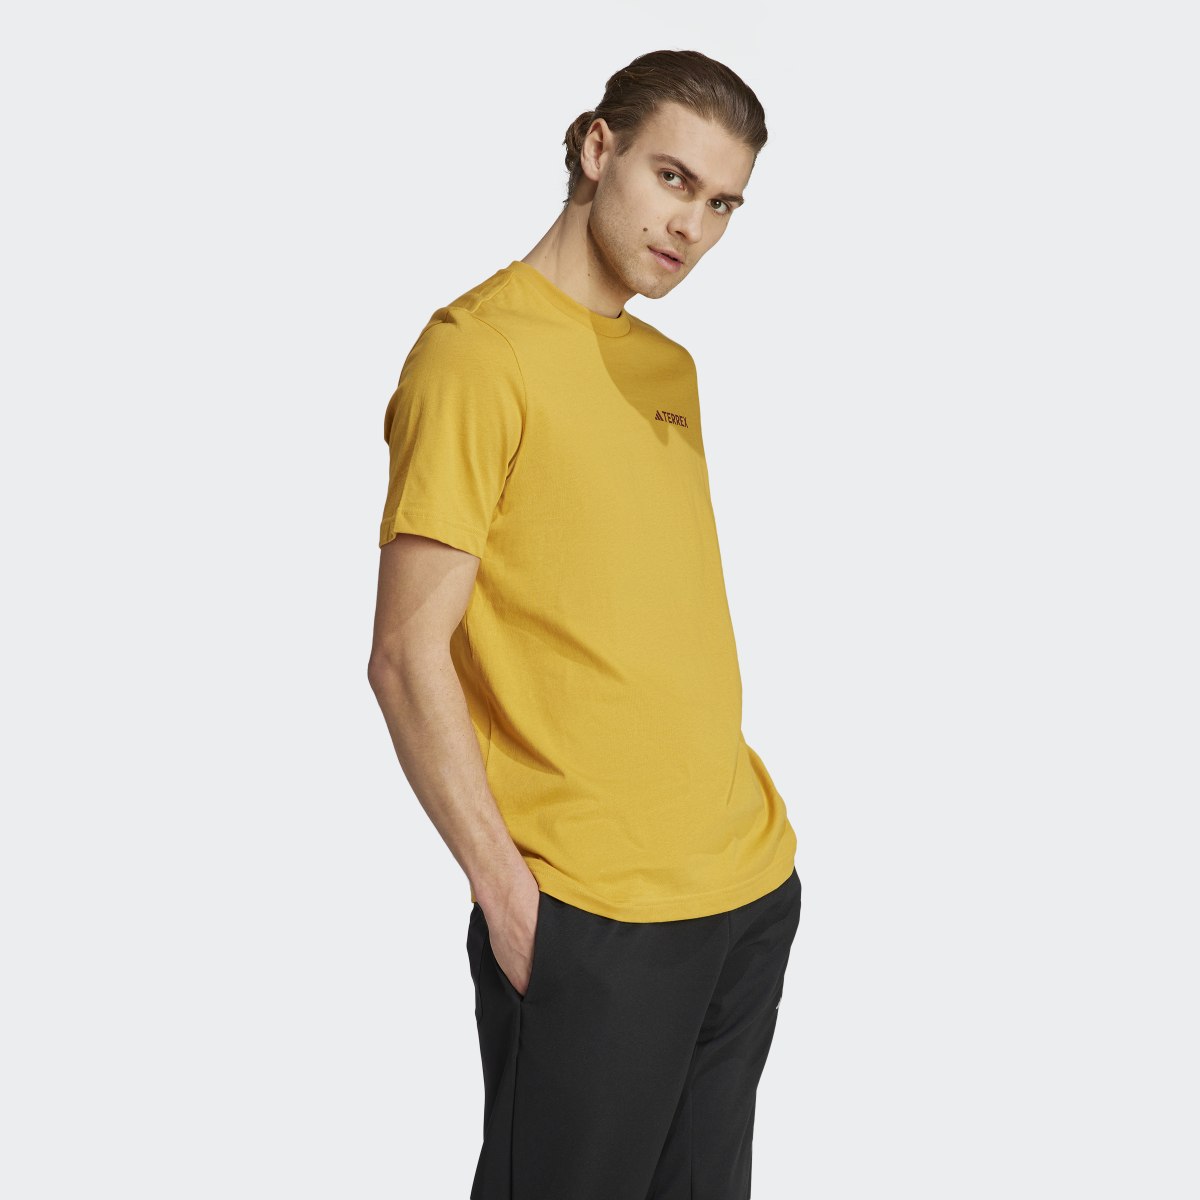 Adidas T-shirt graphique Terrex MTN 2.0. 4